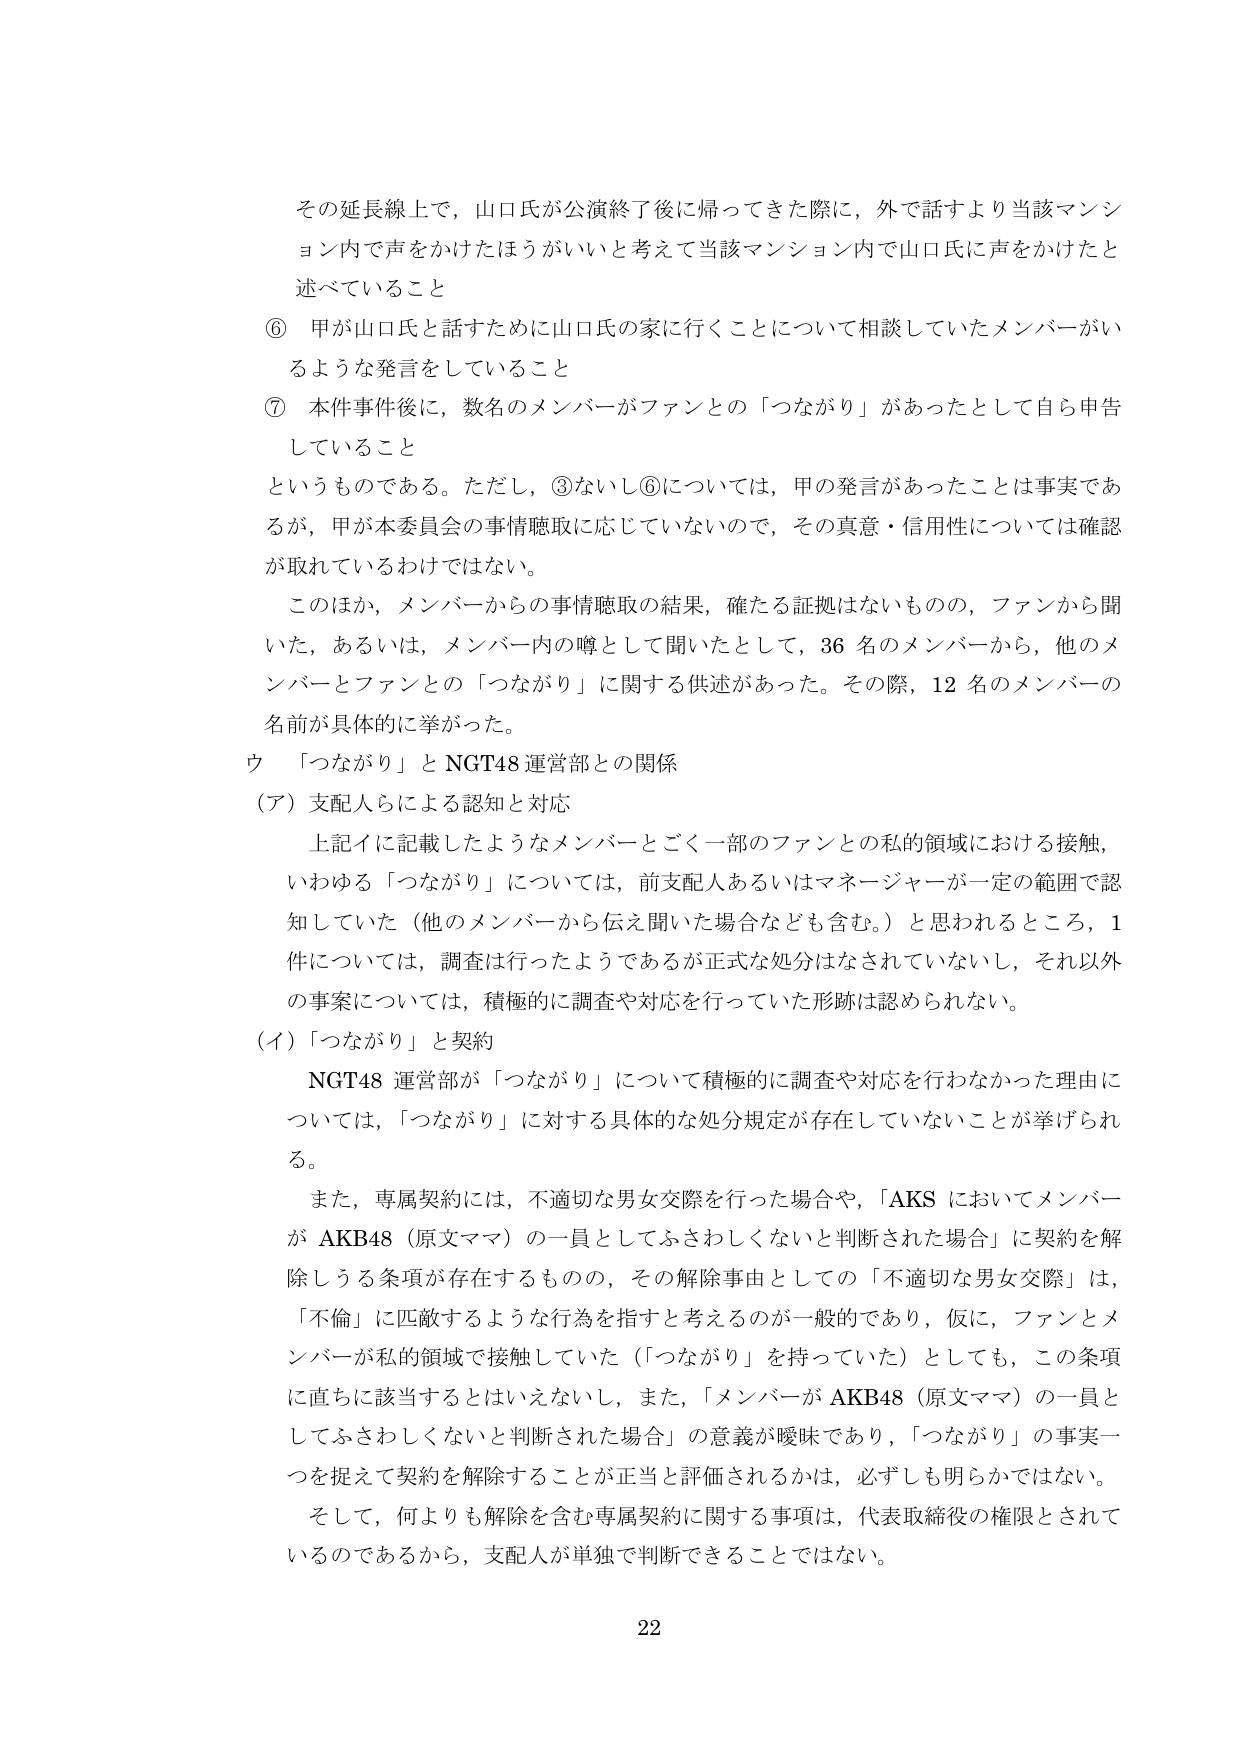 NGT48第三者委員会調査報告書24